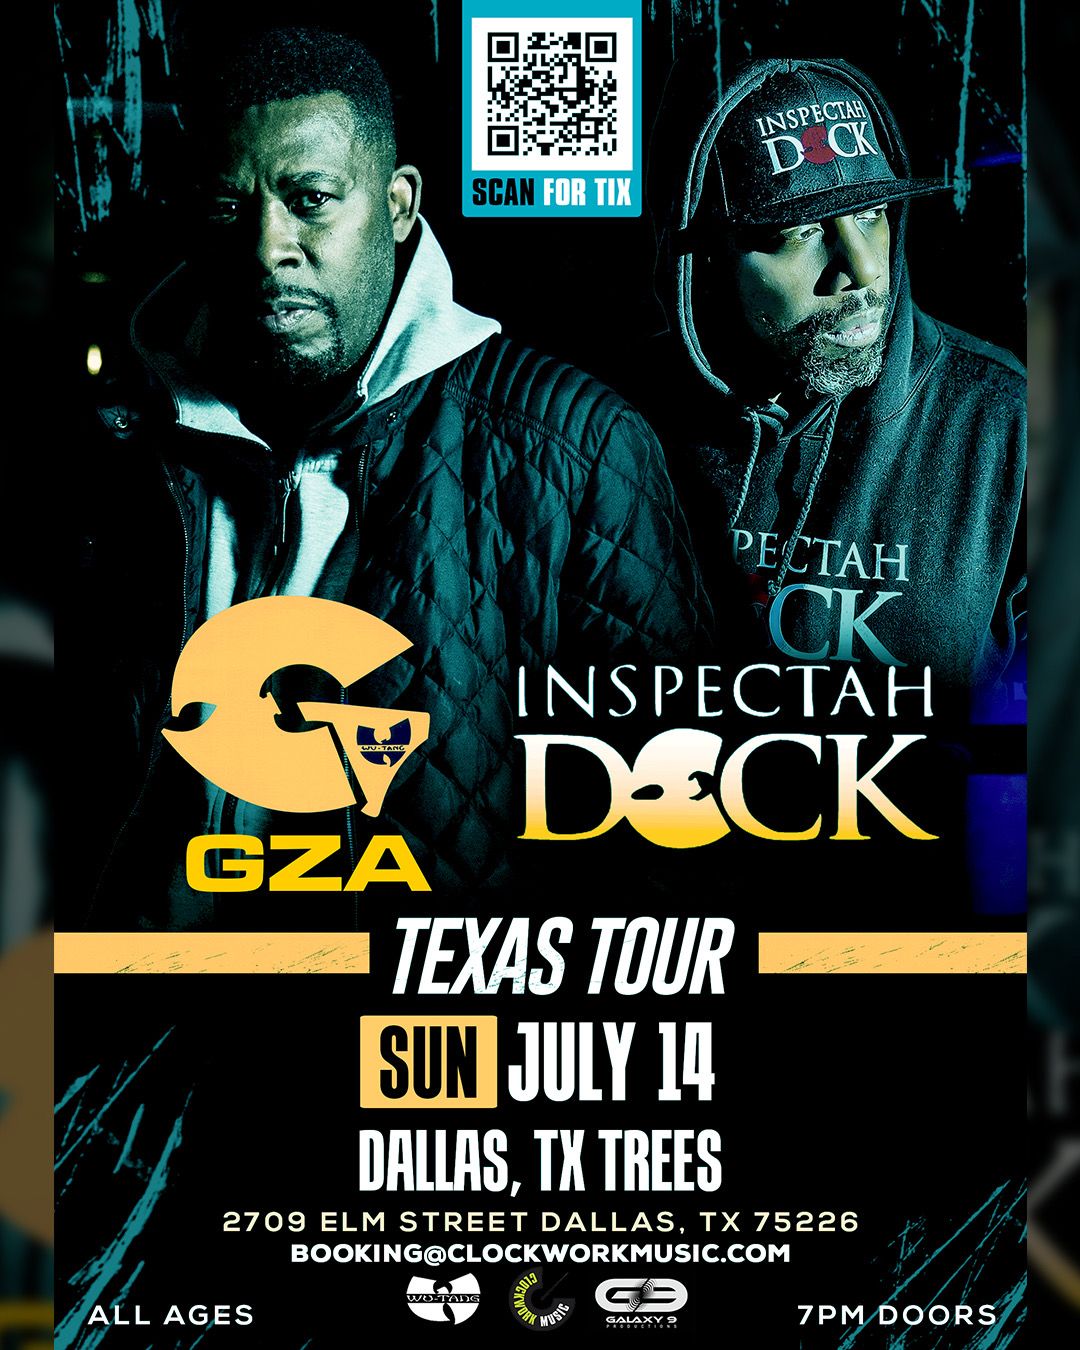 GZA + Inspectah Deck JULY 14th Dallas TX